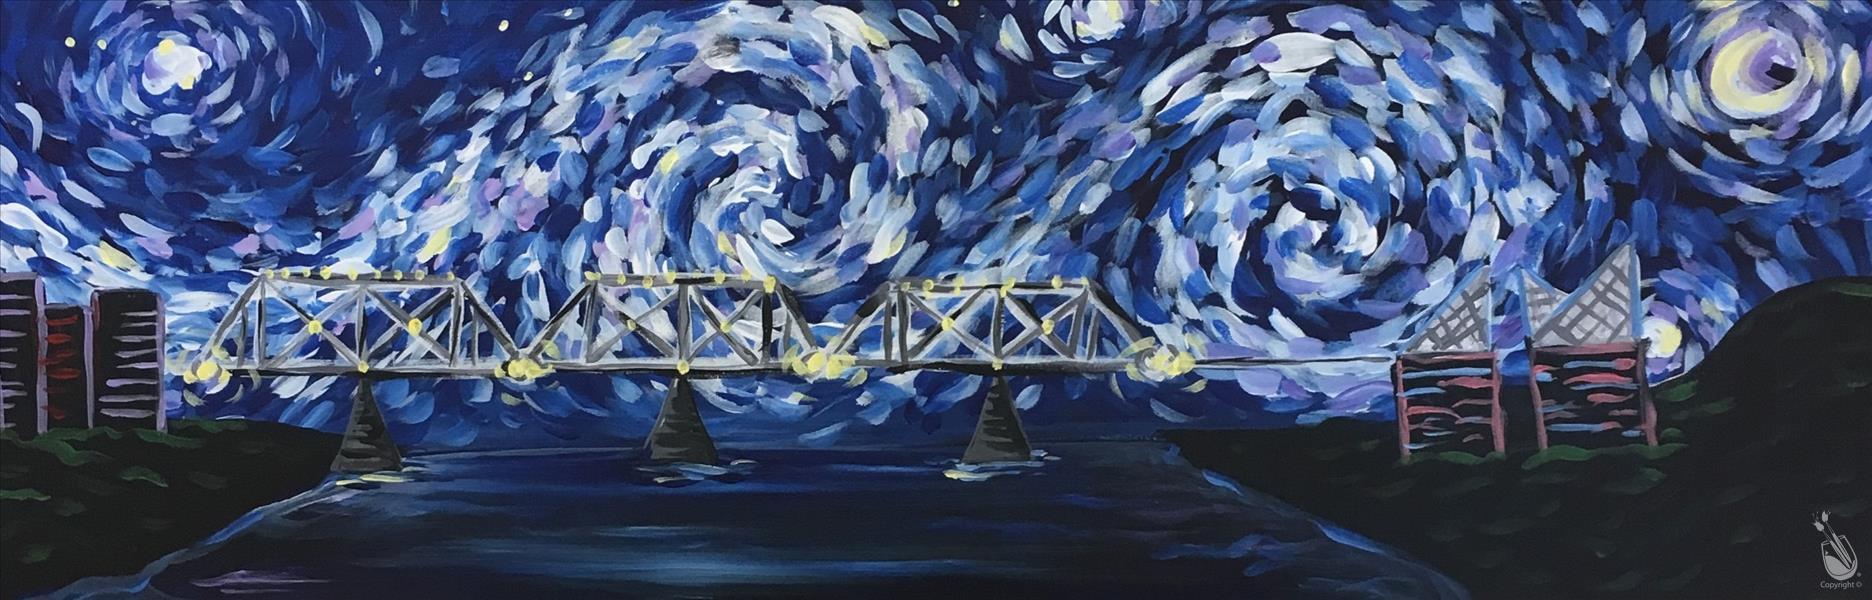 Starry Night on Walnut Street Bridge